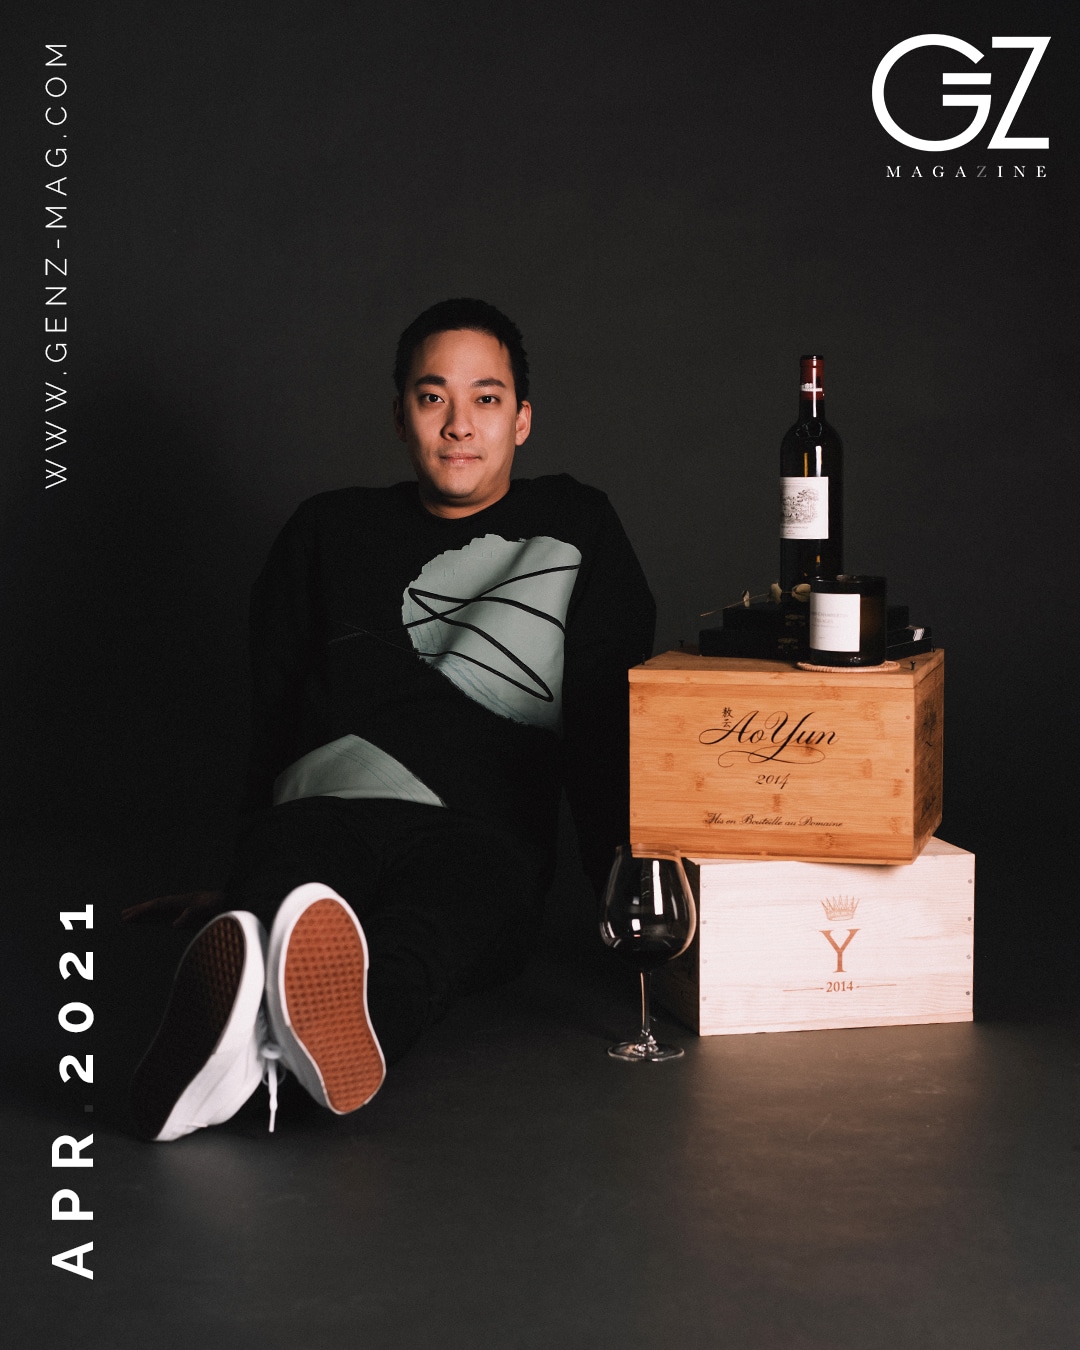 Mason Ng Park 90 Wine Director Gen-Z Magazine